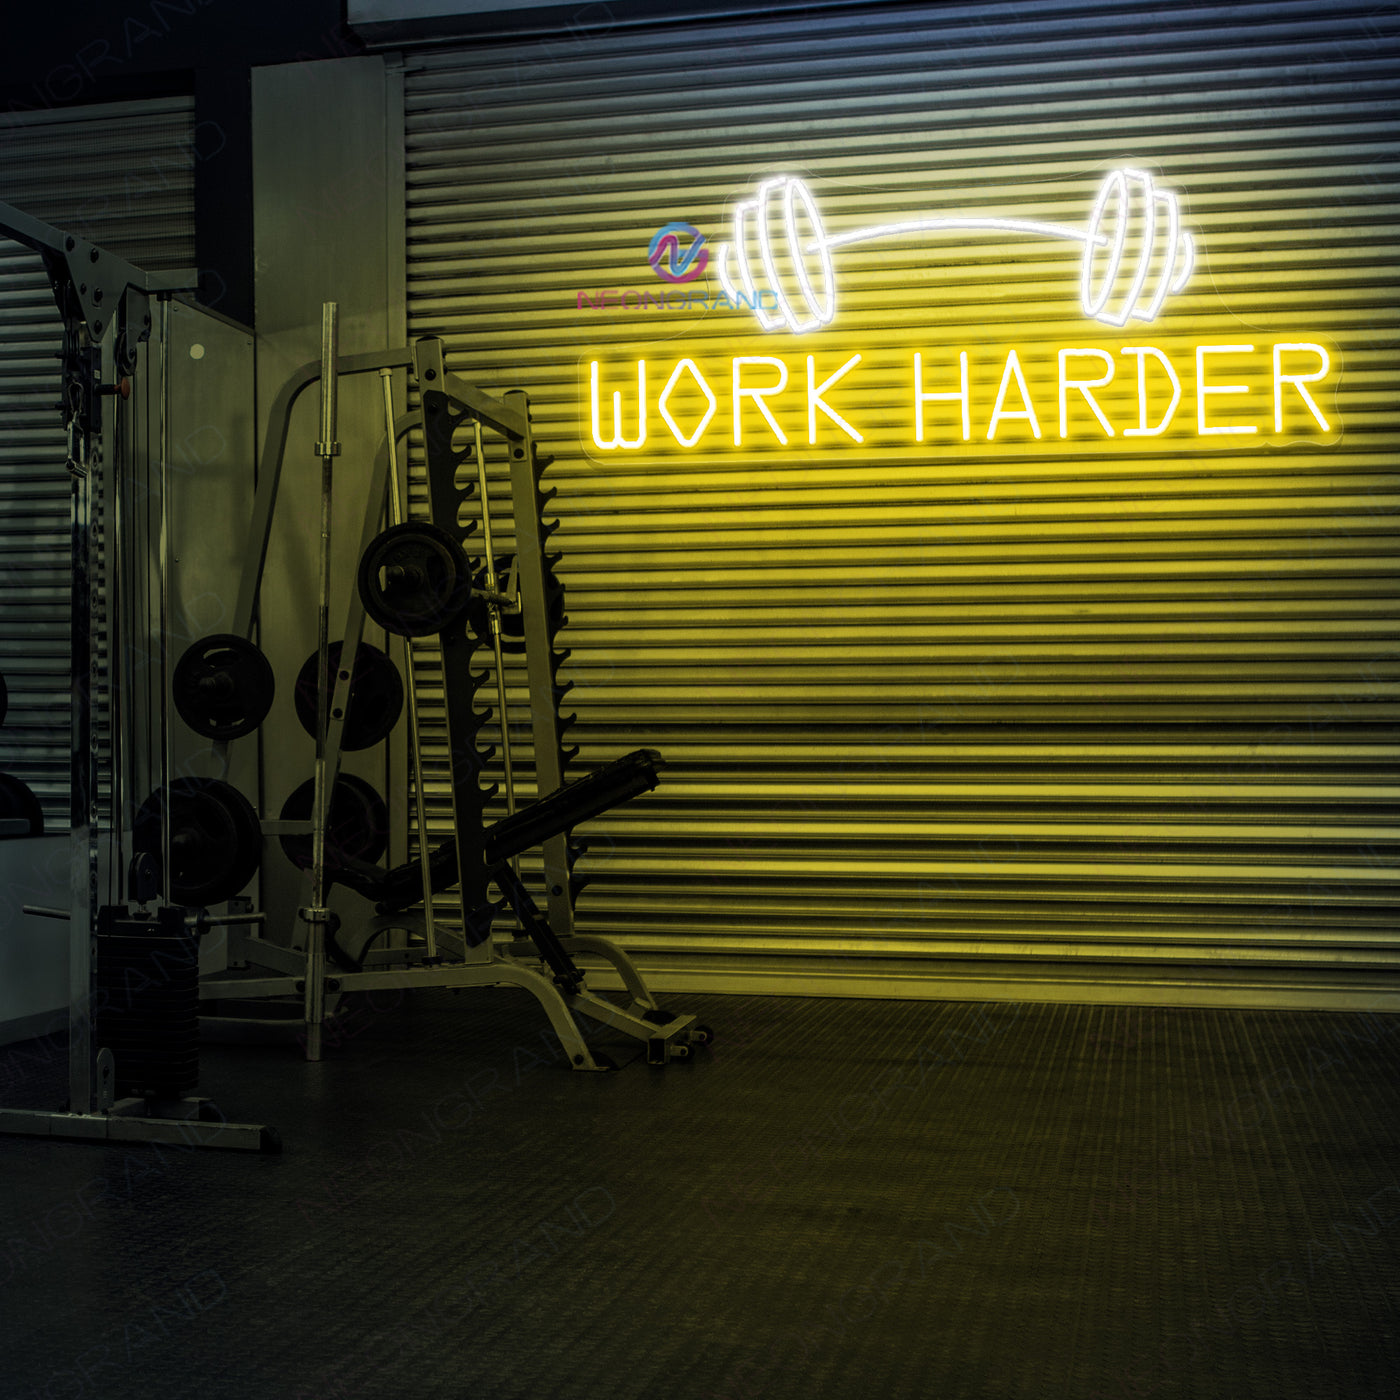 Work Harder Neon Sign Gym Led Light yellow